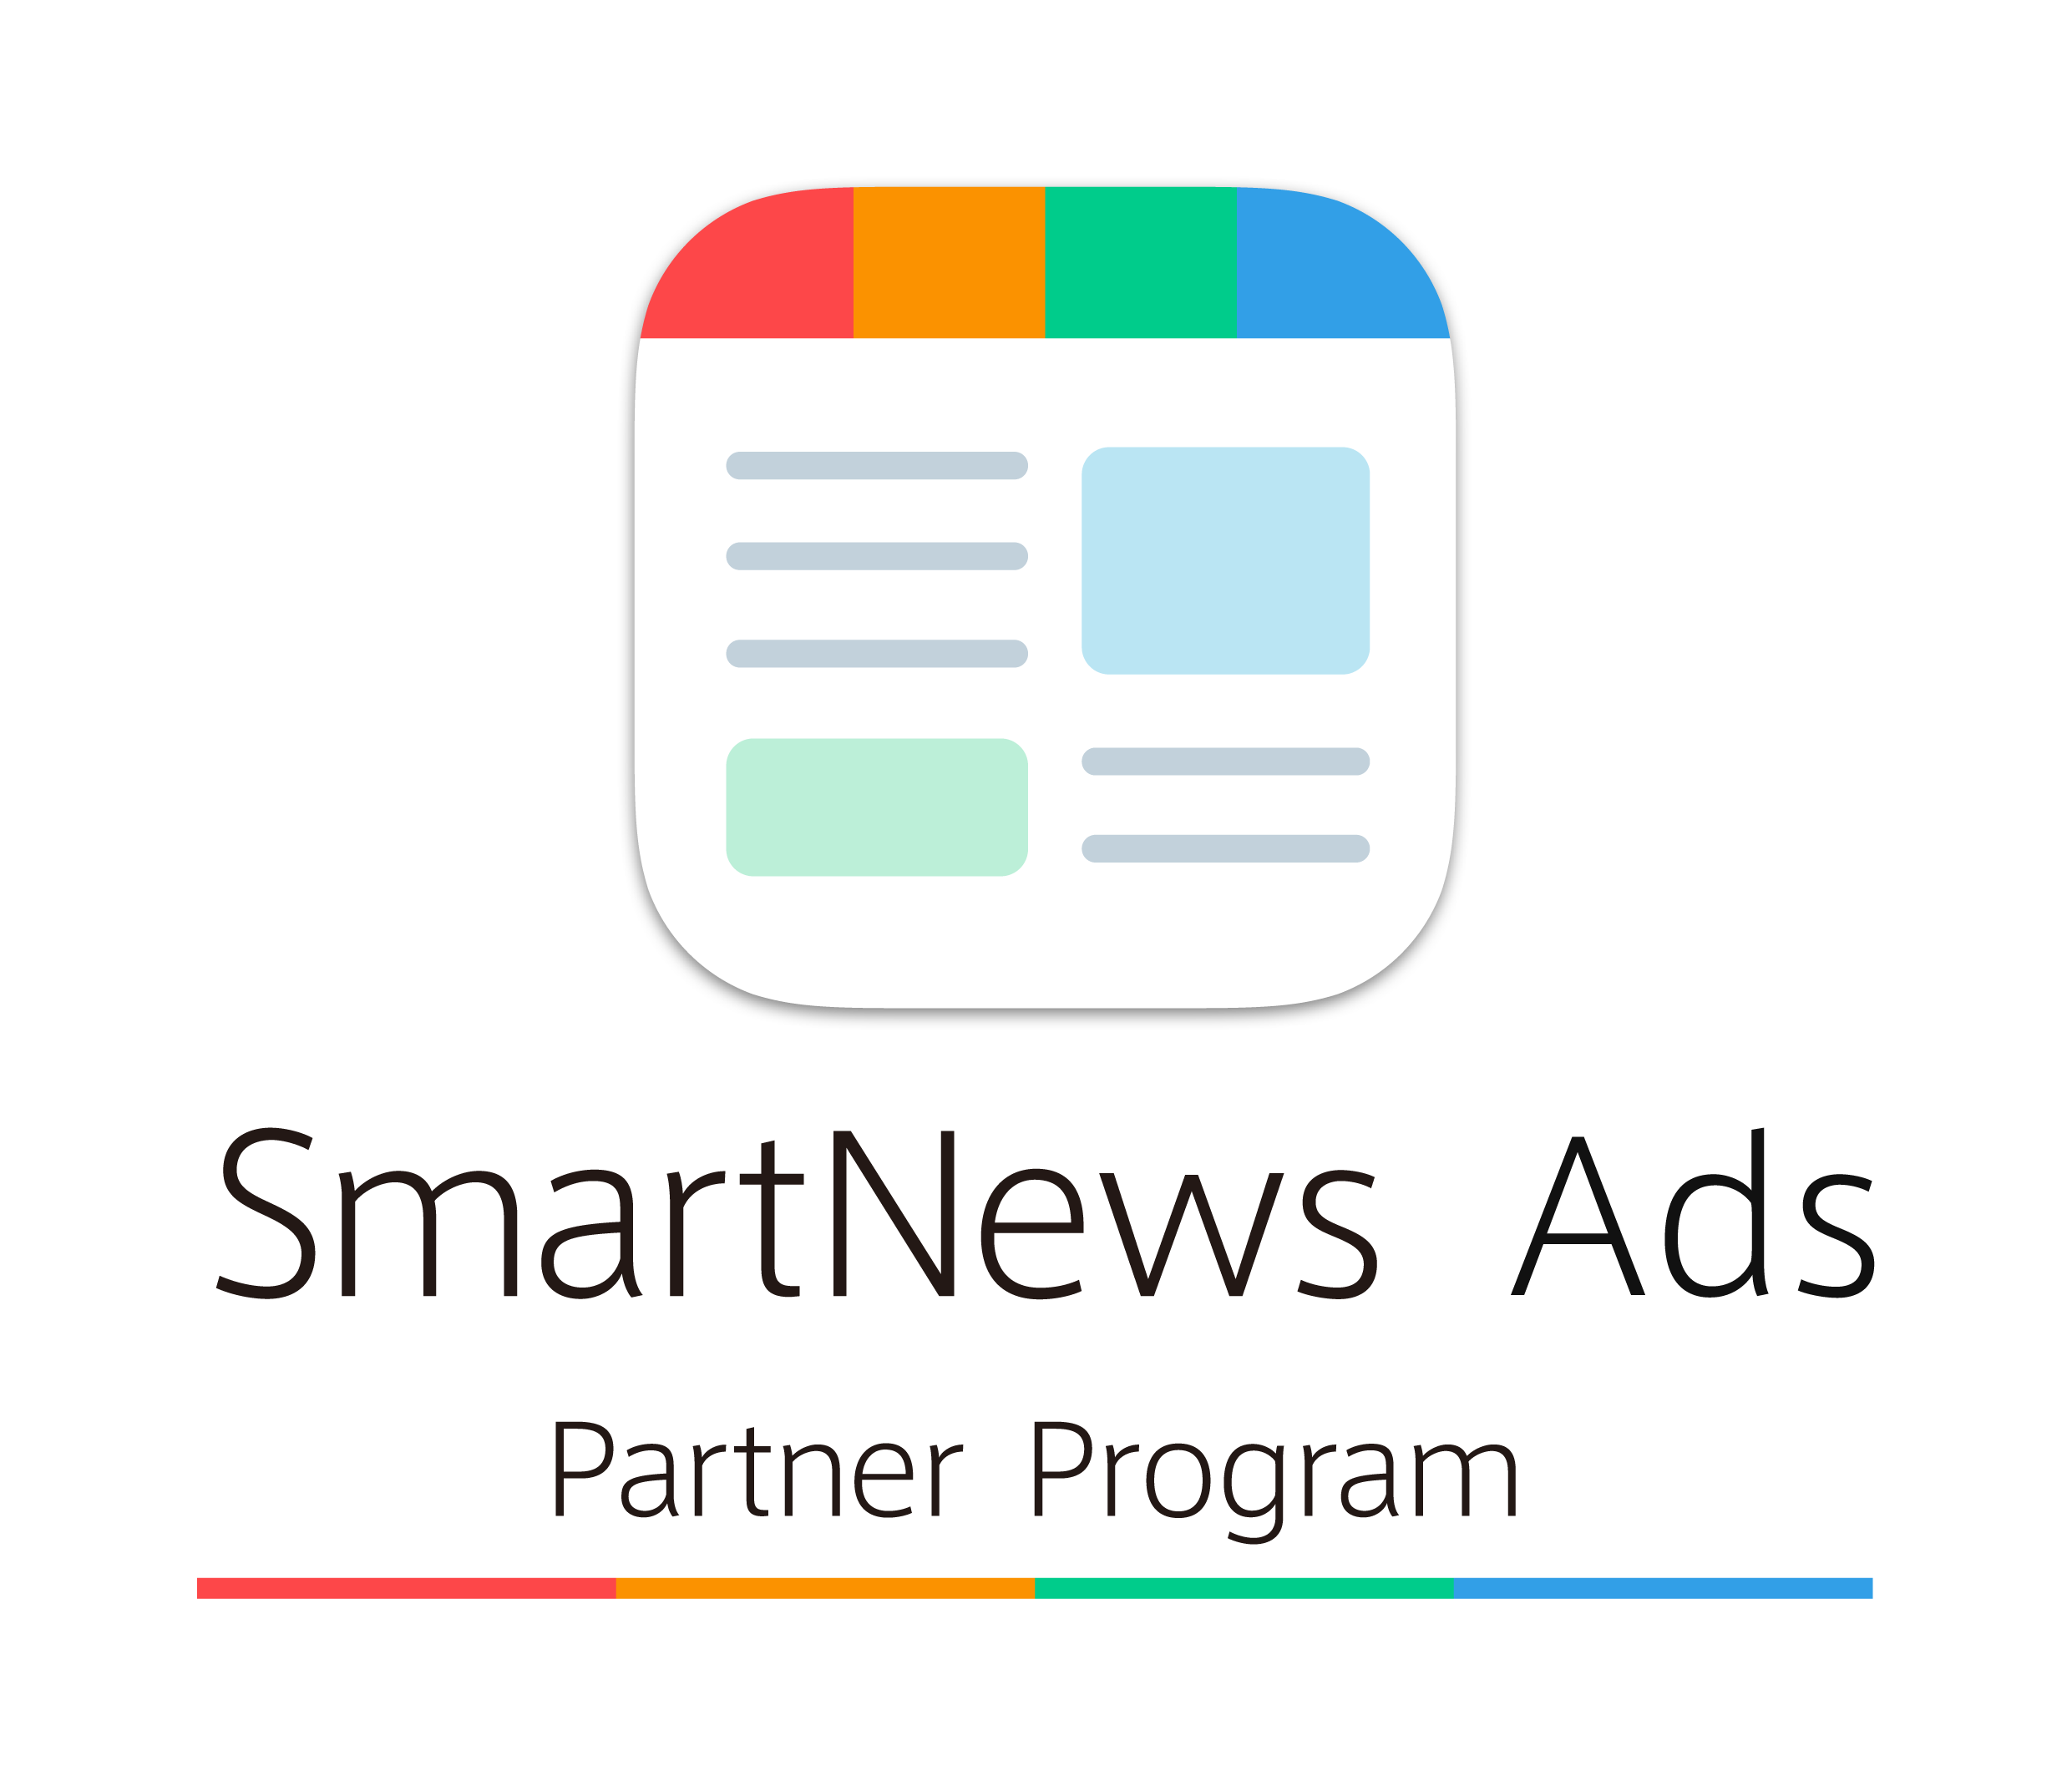 SmartNewsの認定代理店制度「SmartNews Ads パートナープログラム」において「SmartNews A…